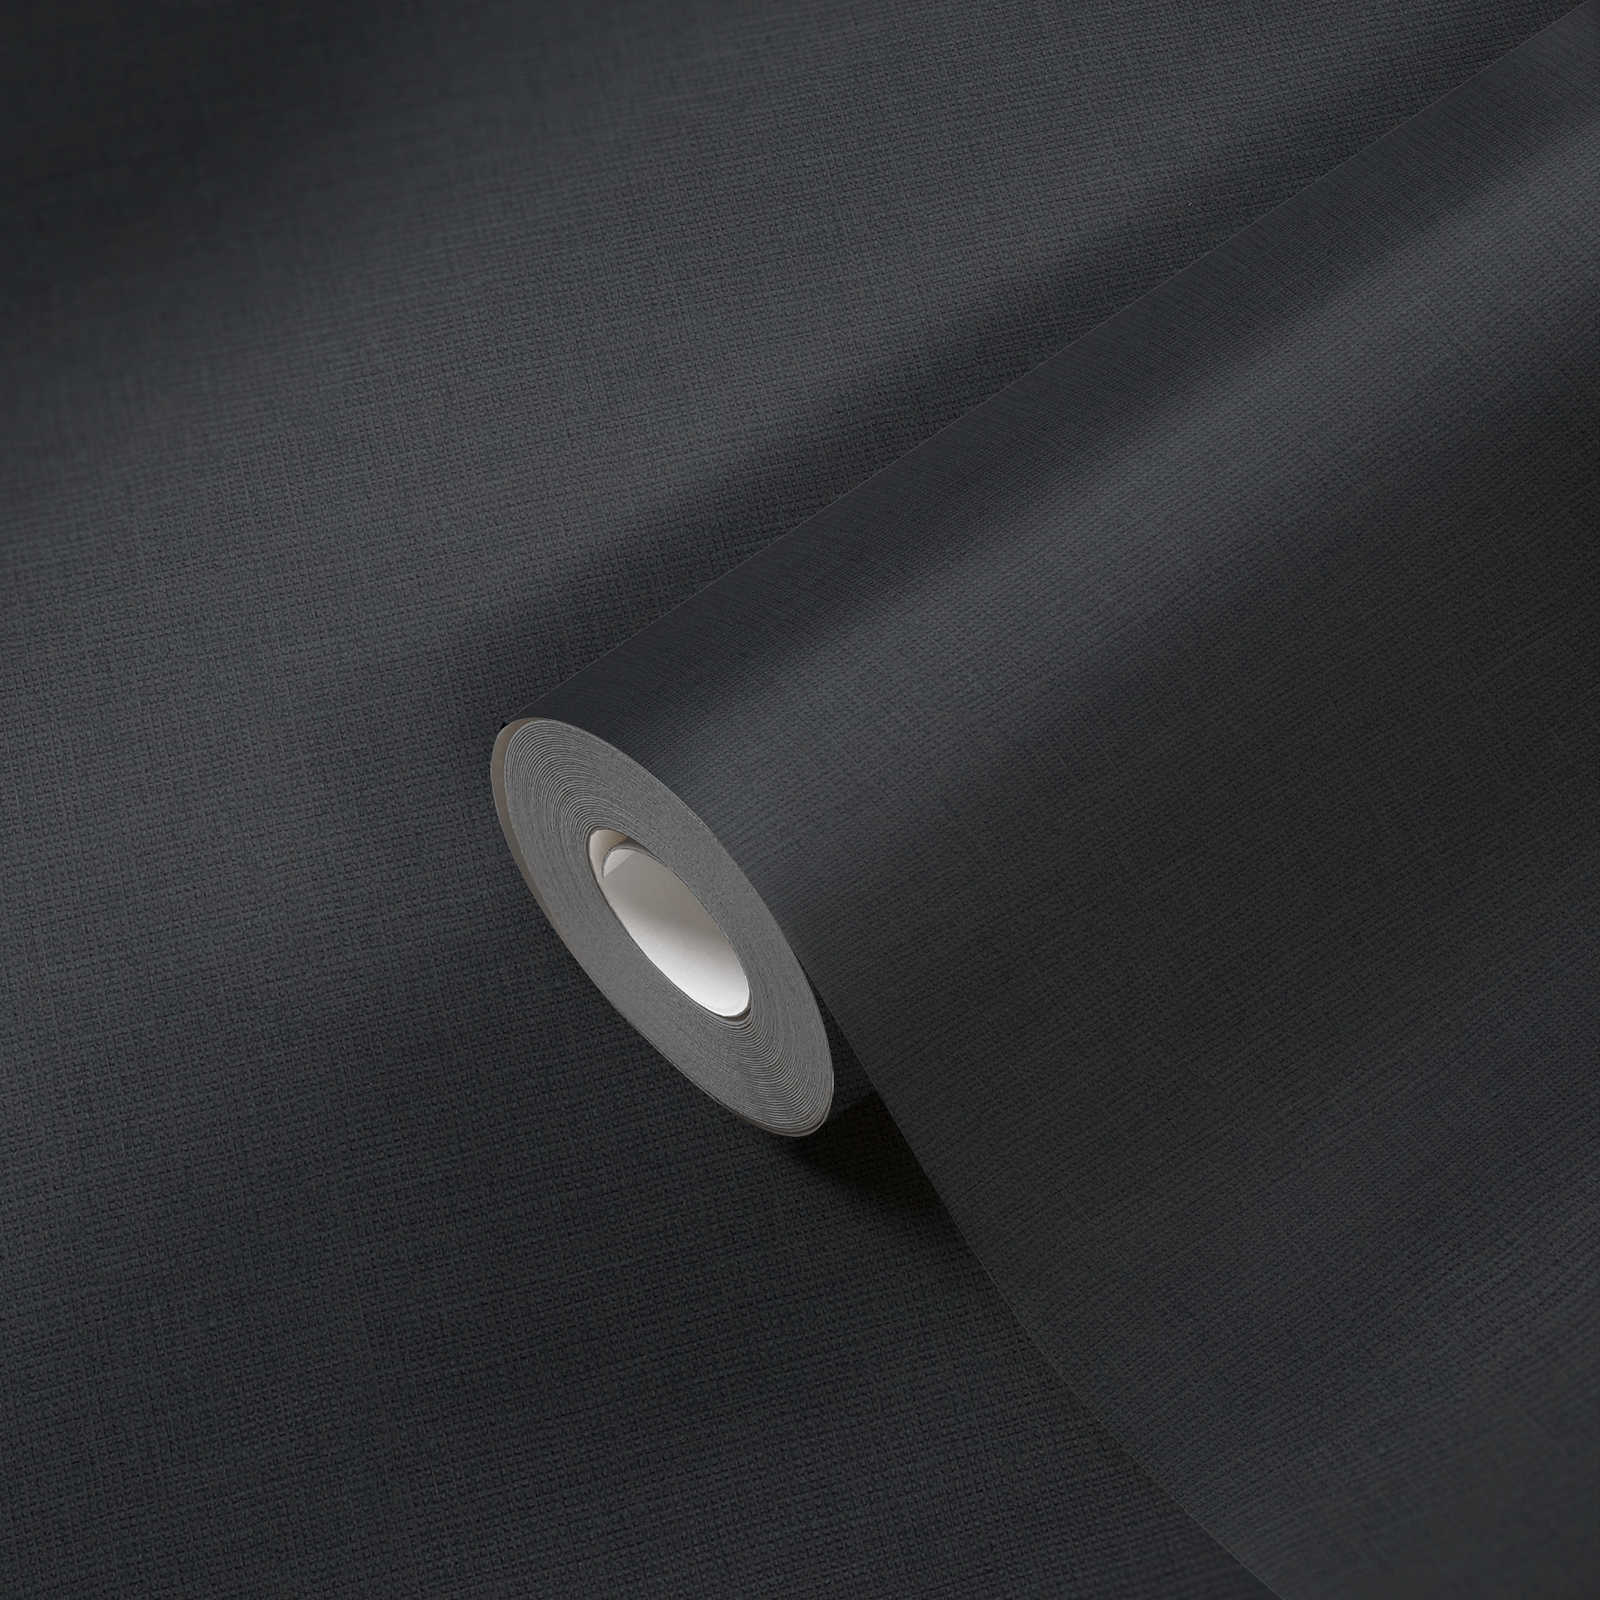             Papel pintado no tejido liso con estructura de lino - negro
        